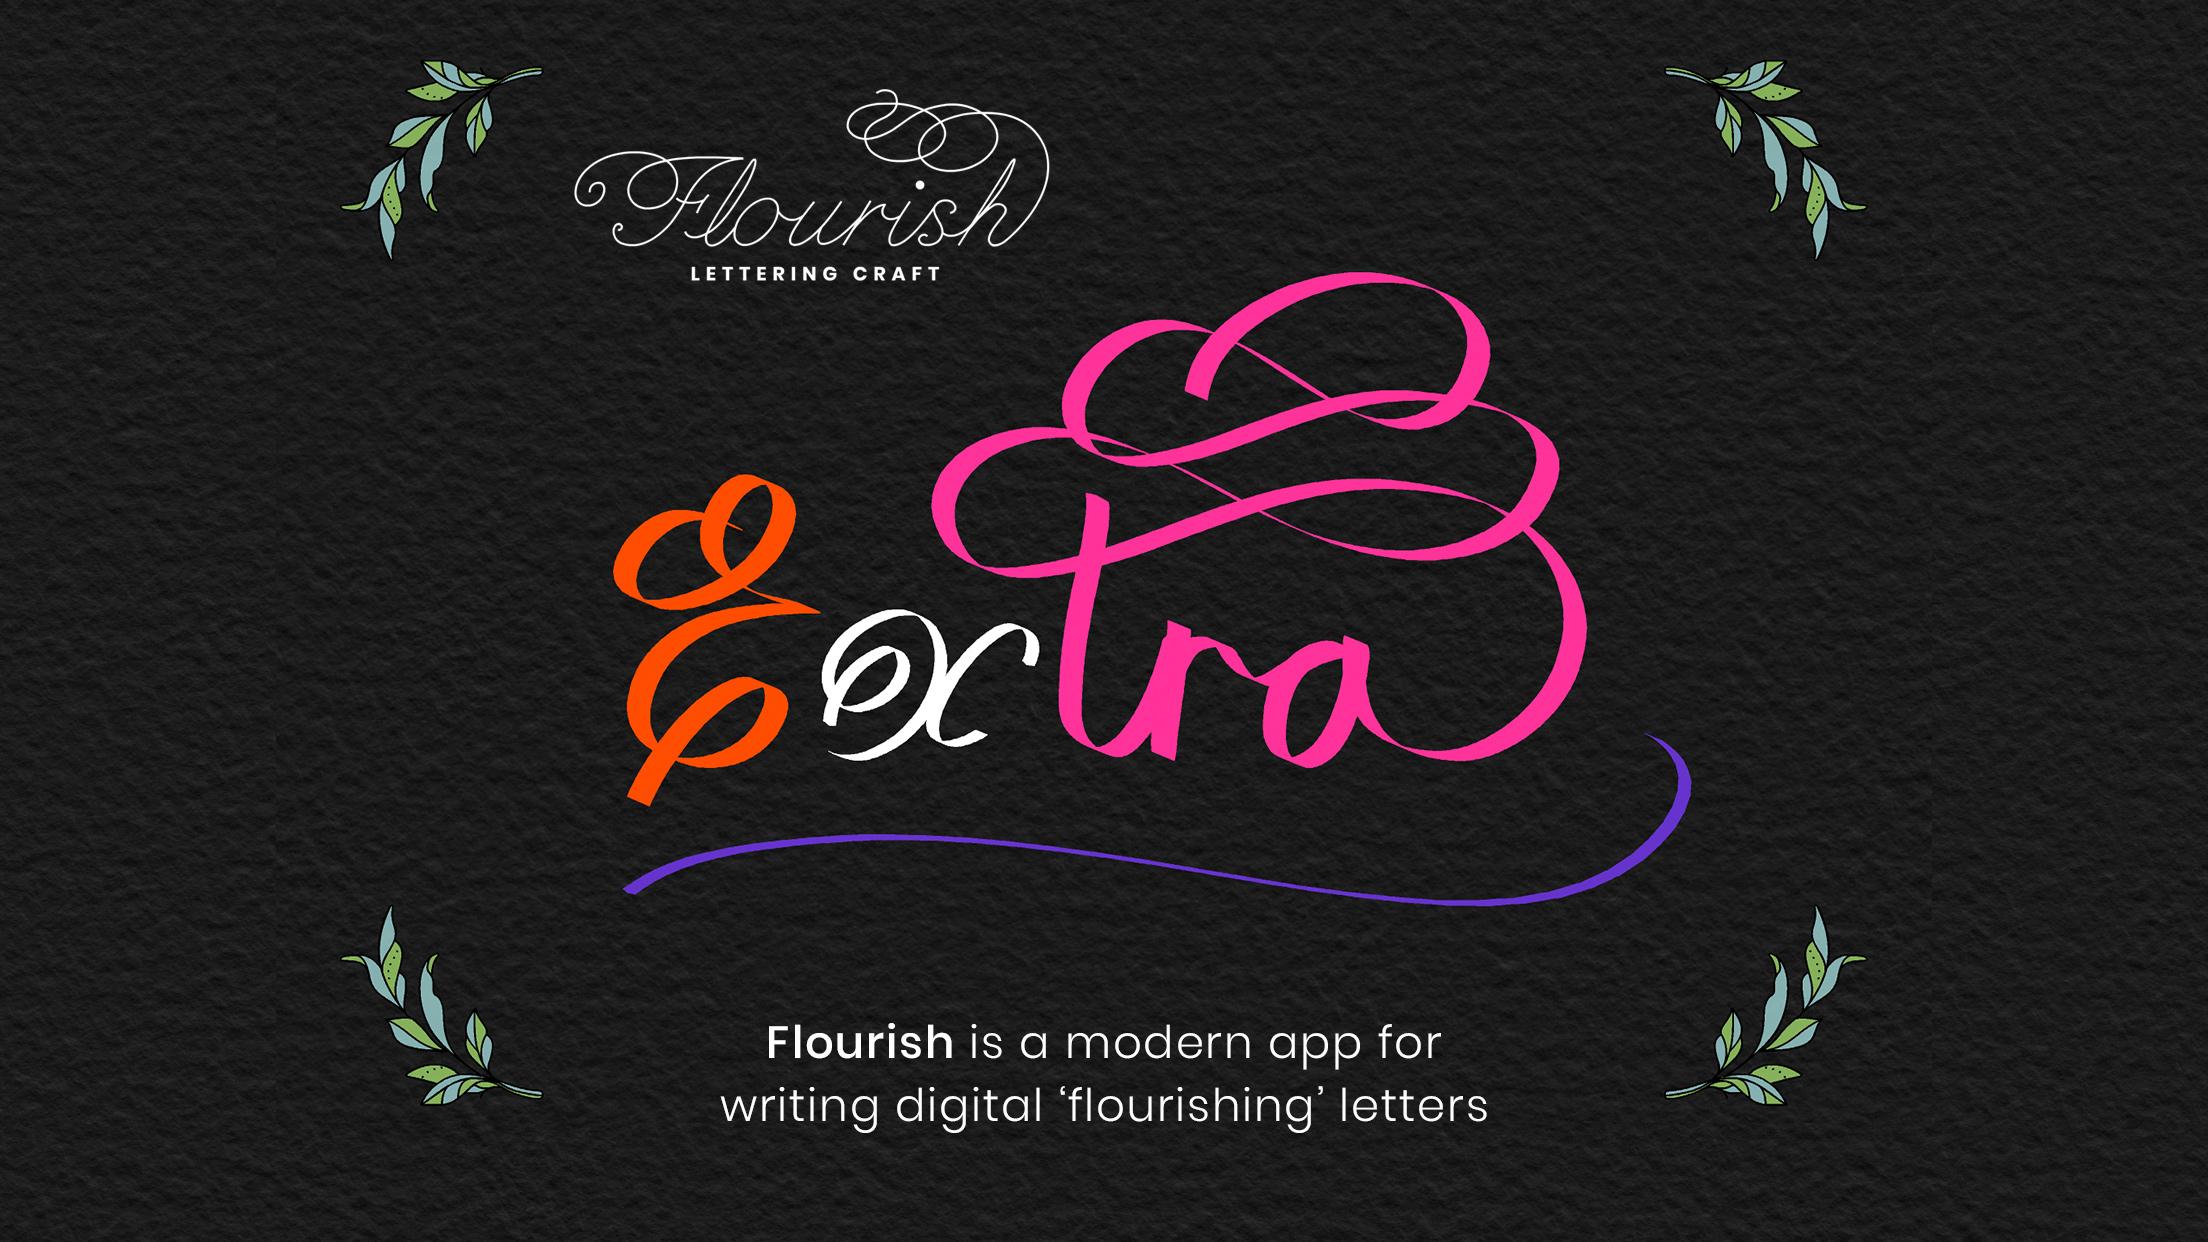 Flourish Calligraphy Lettering Craft 1.0.9 Screenshot 1